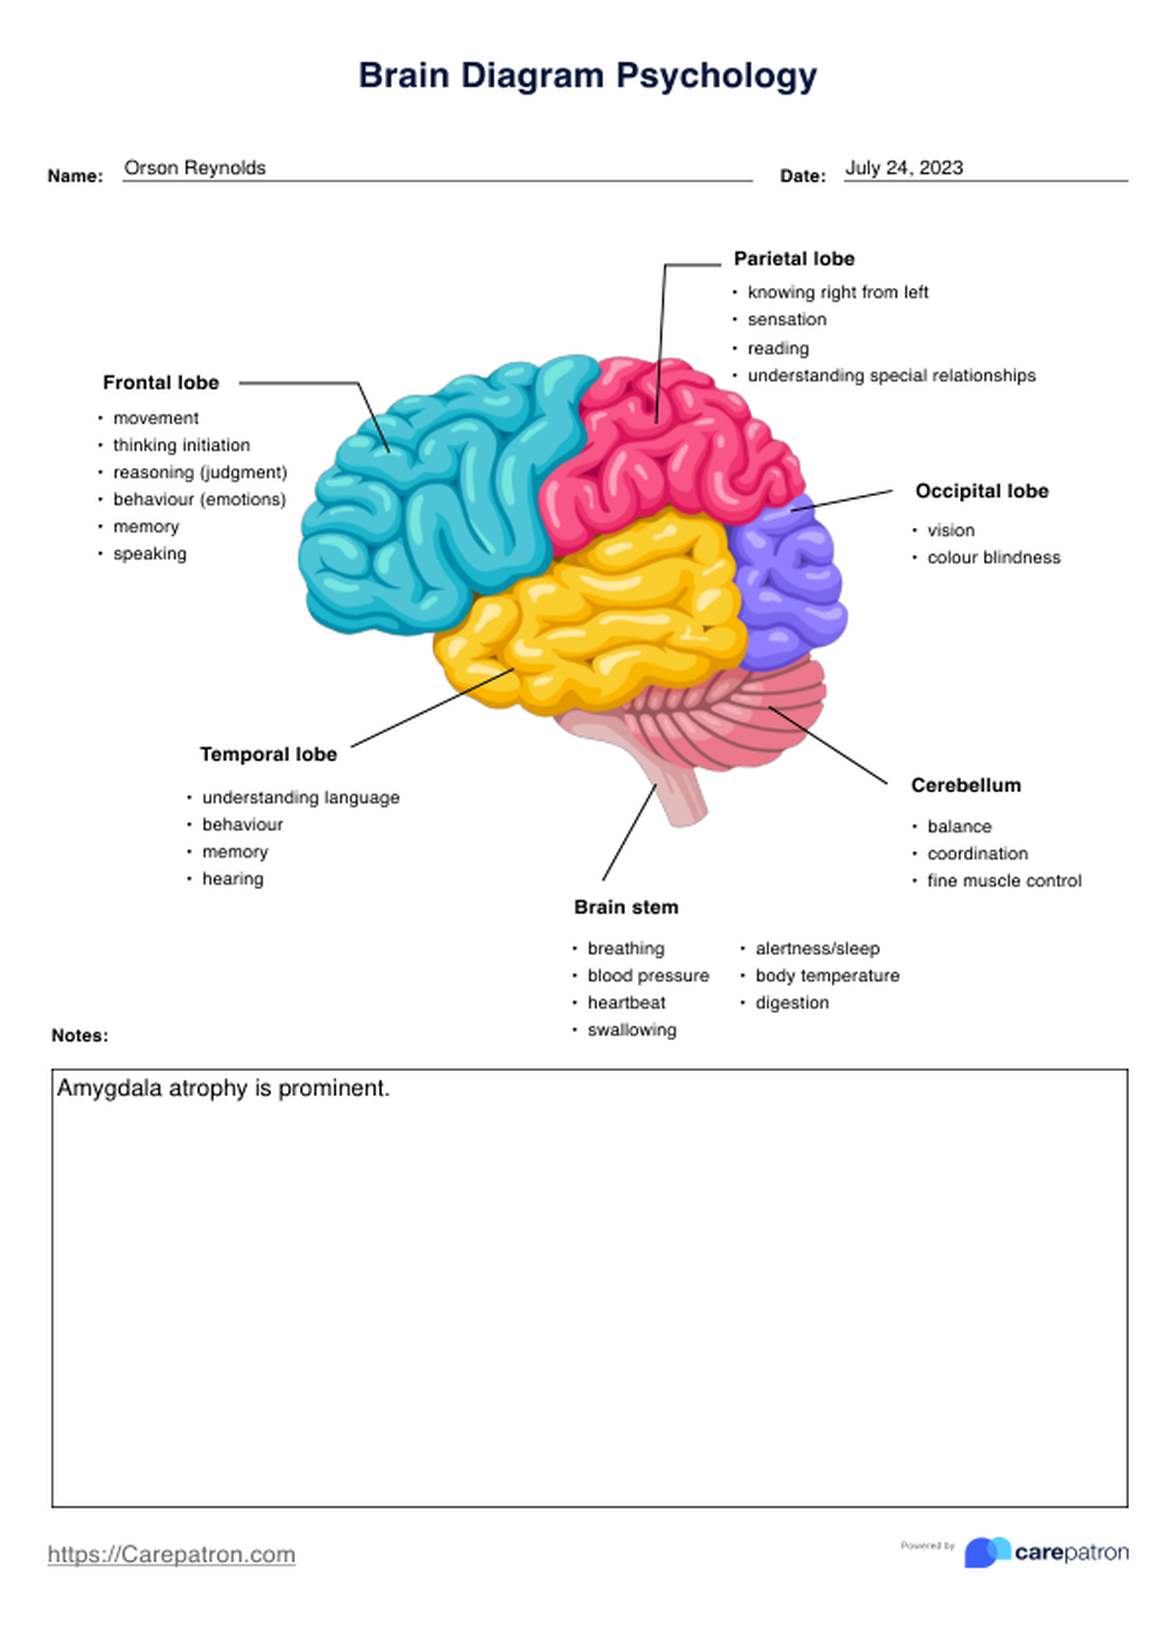 Brain Diagram Psychology PDF Example